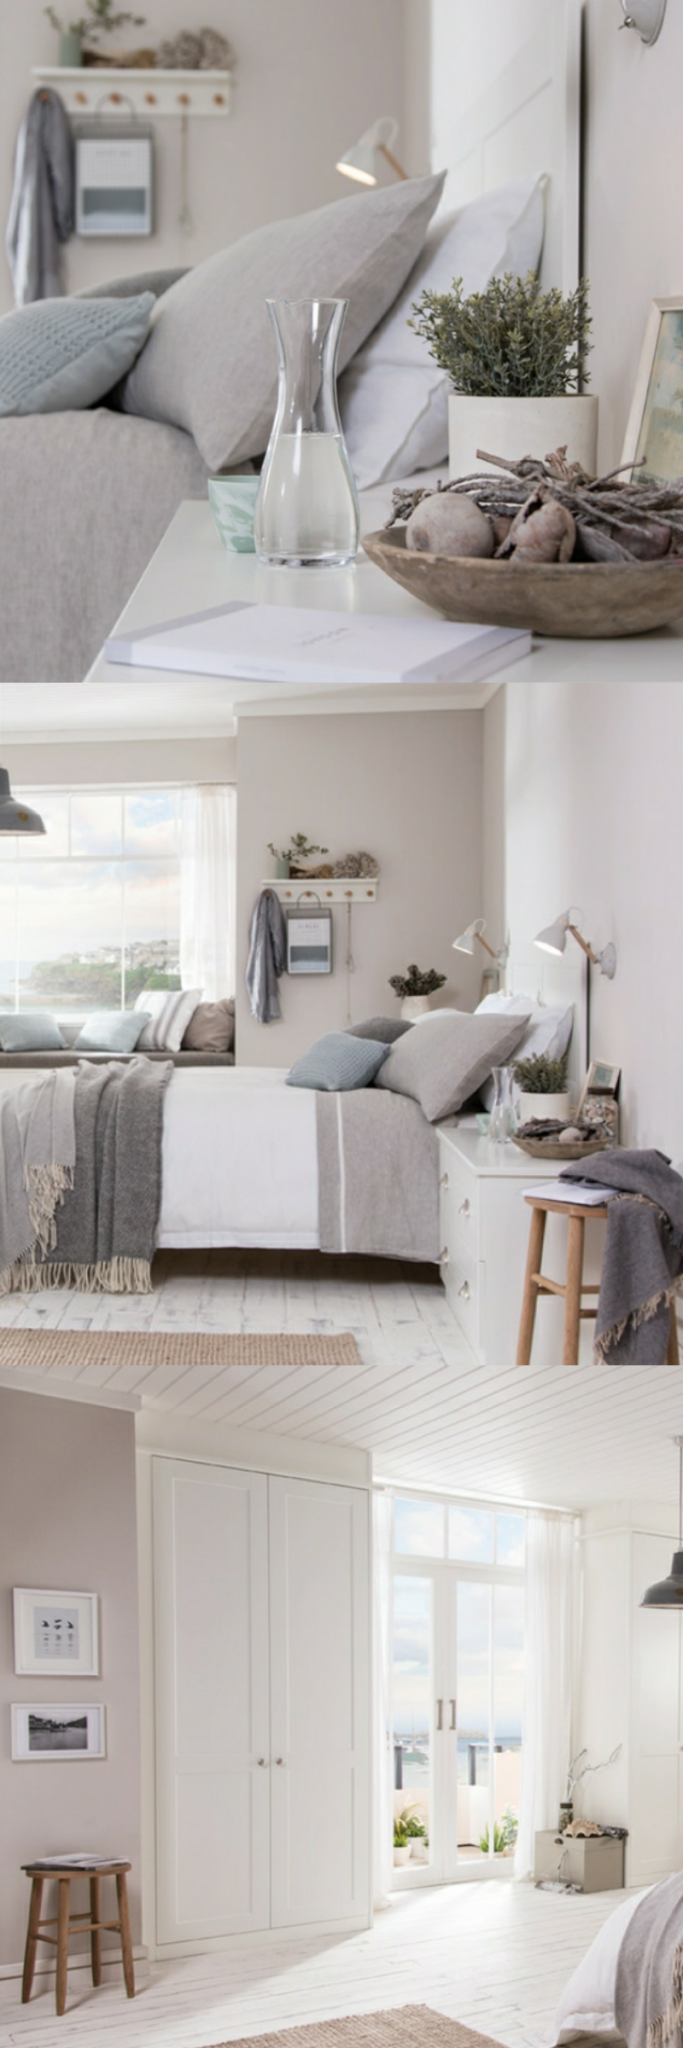 modern style bedroom furniture